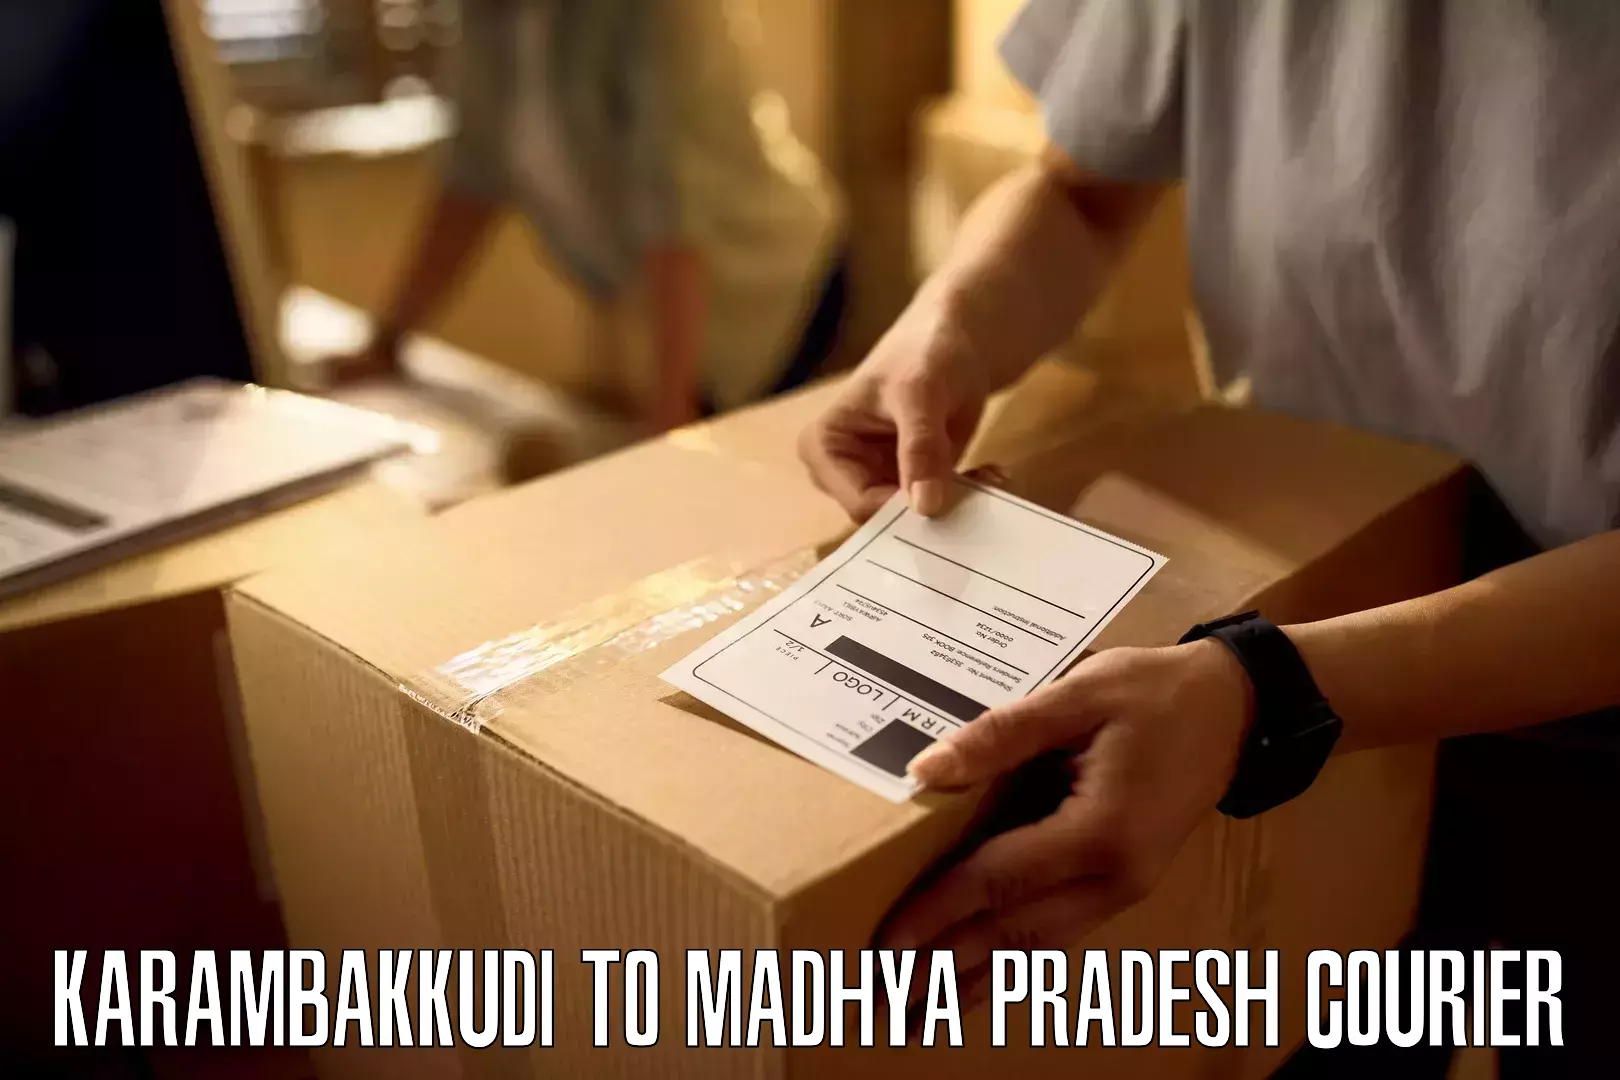 Courier service booking Karambakkudi to BHEL Bhopal